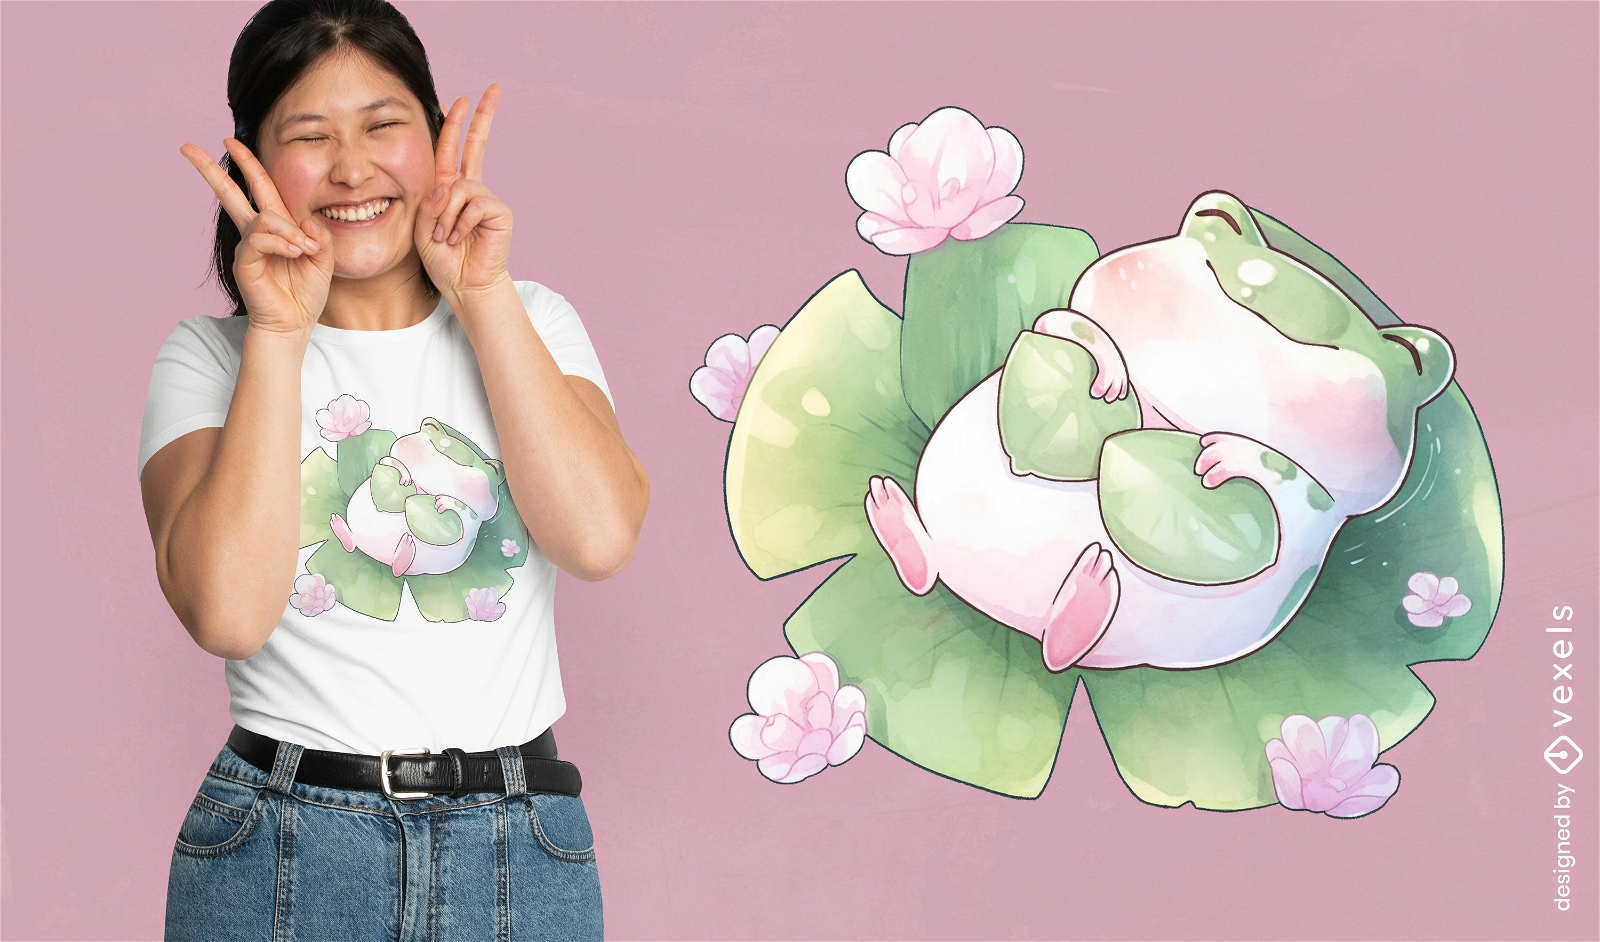 Sleeping frog lily pad t-shirt design